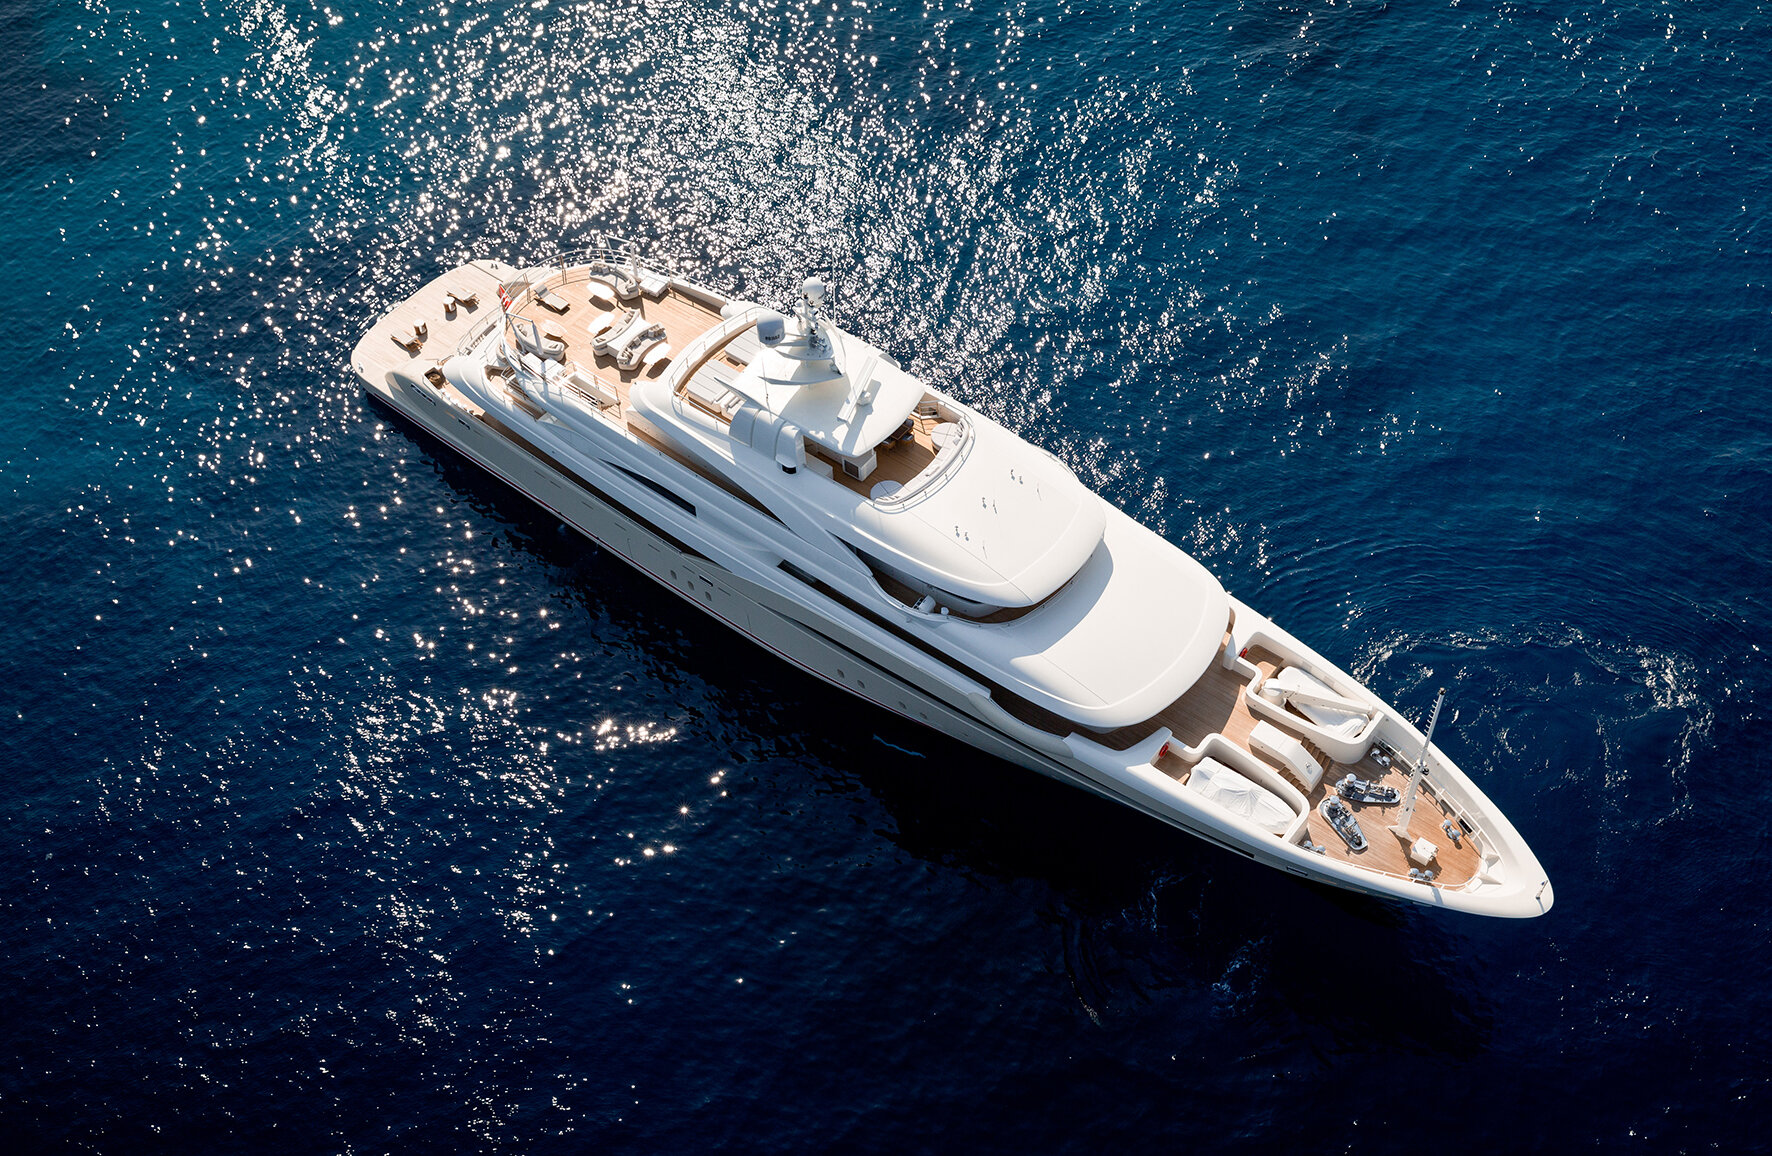 Fraser Yachts Monaco Andy Bain luxury branding design